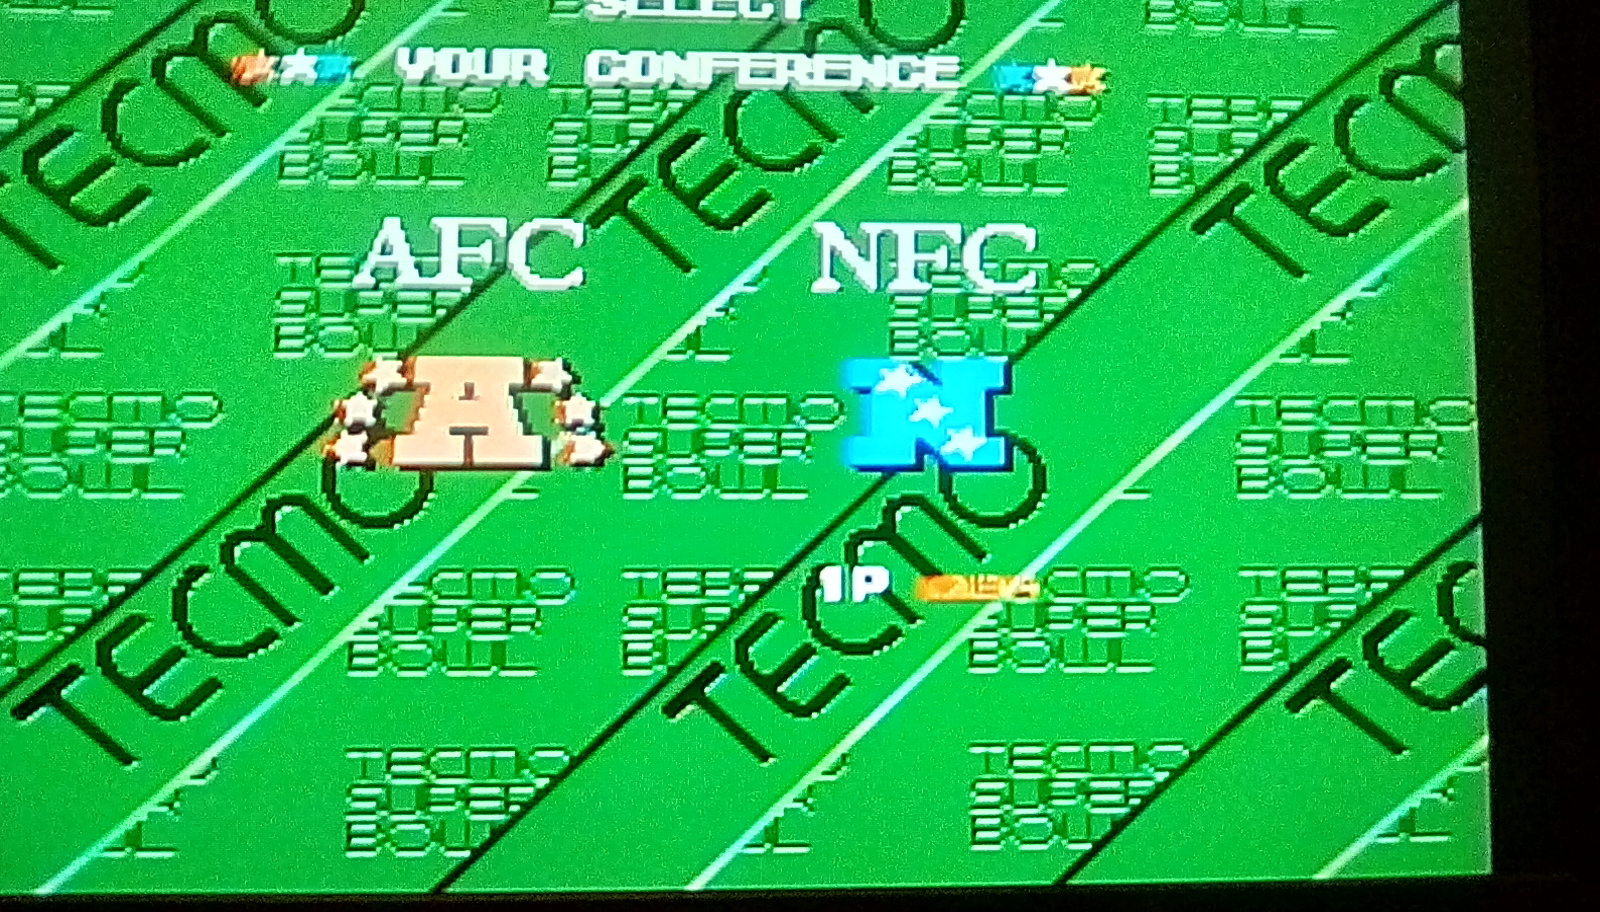 JML101582: Tecmo Super Bowl [Most Receptions] [Pro Bowl] (Sega Genesis / MegaDrive Emulated) 15 points on 2019-01-19 19:13:55